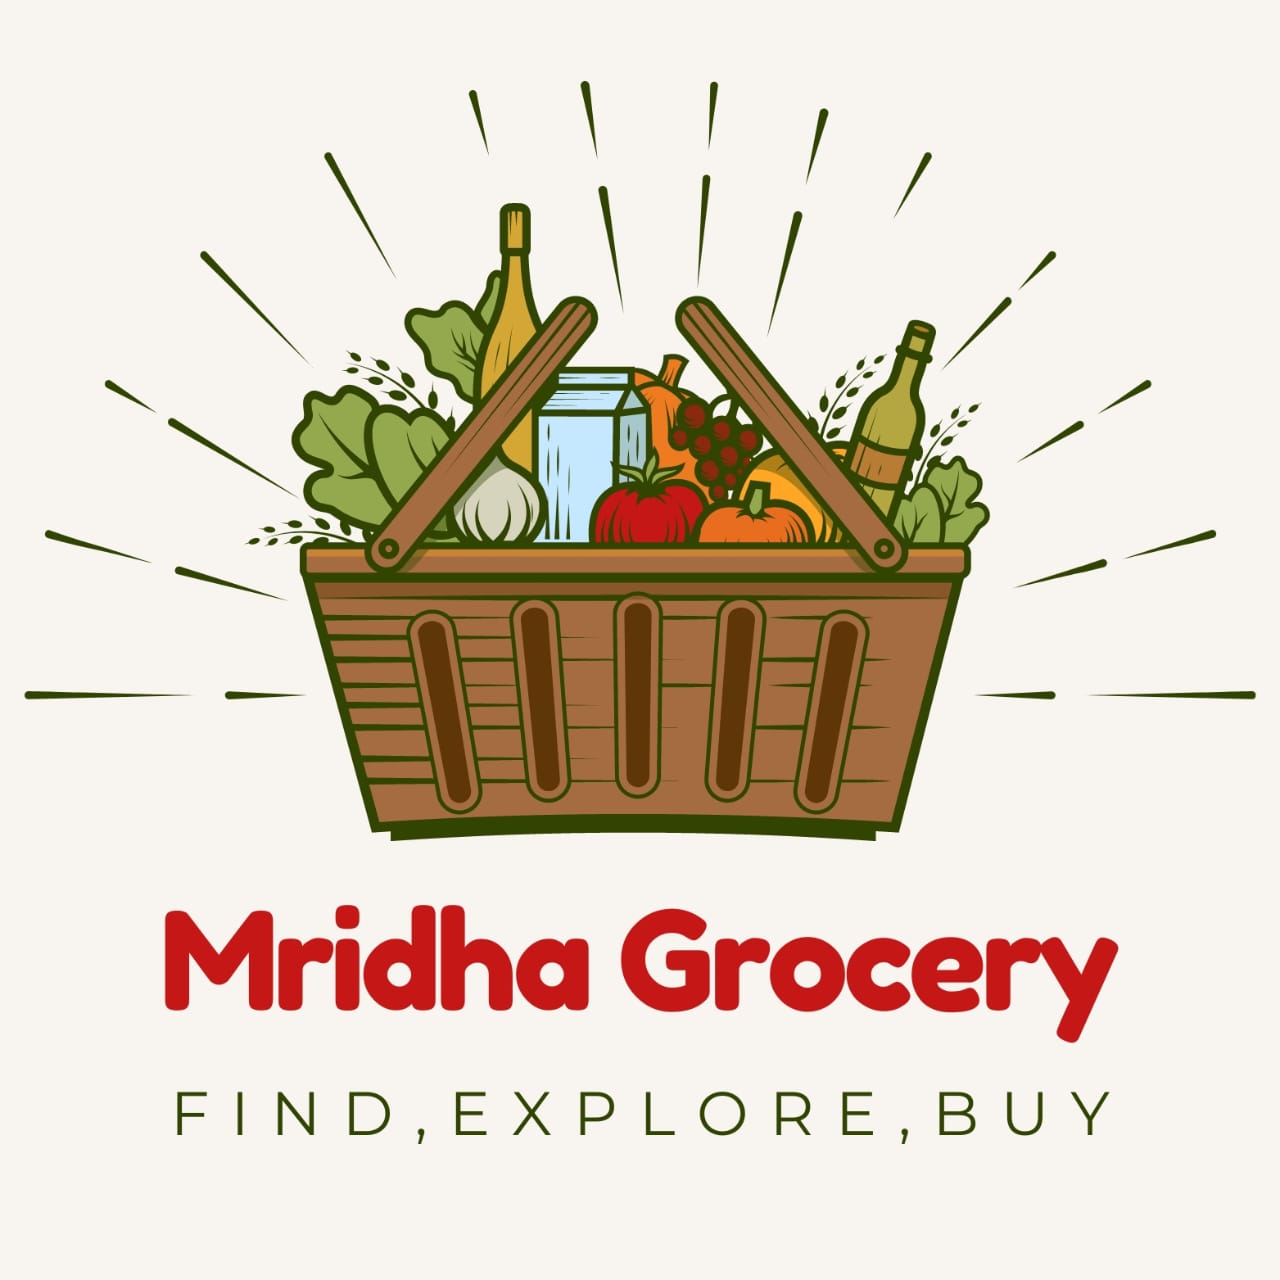 Mridha Grocery